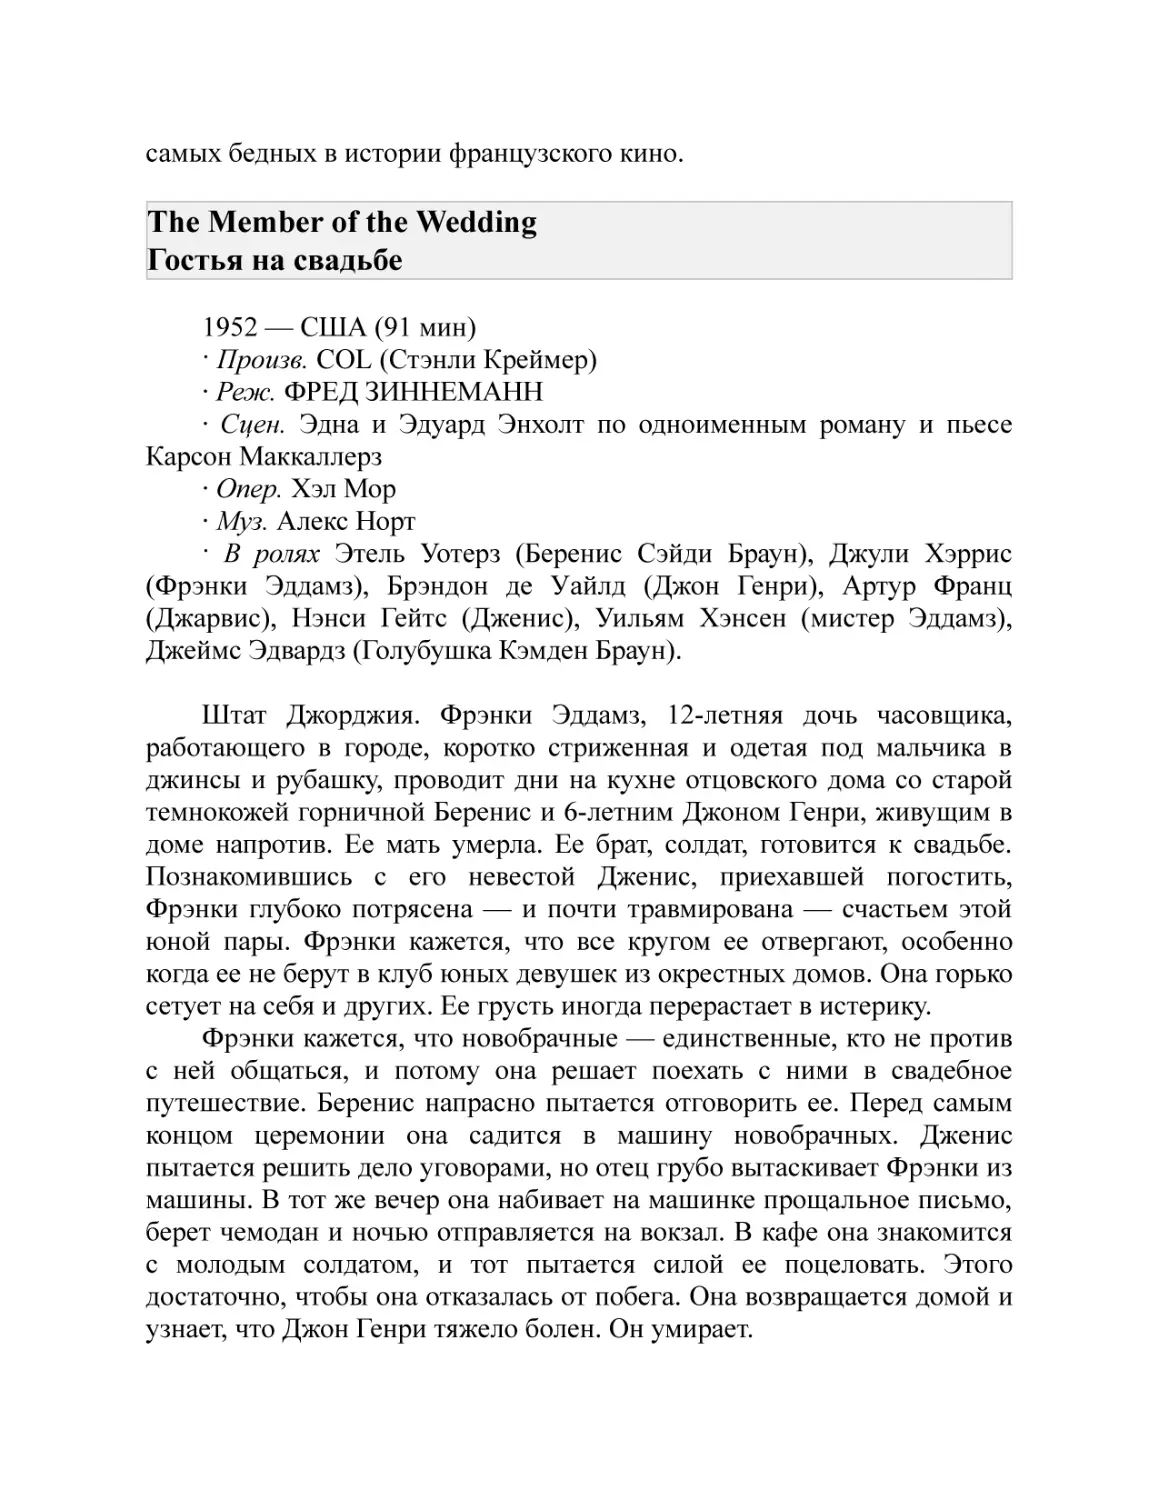 The Member of the Wedding Гостья на свадьбе